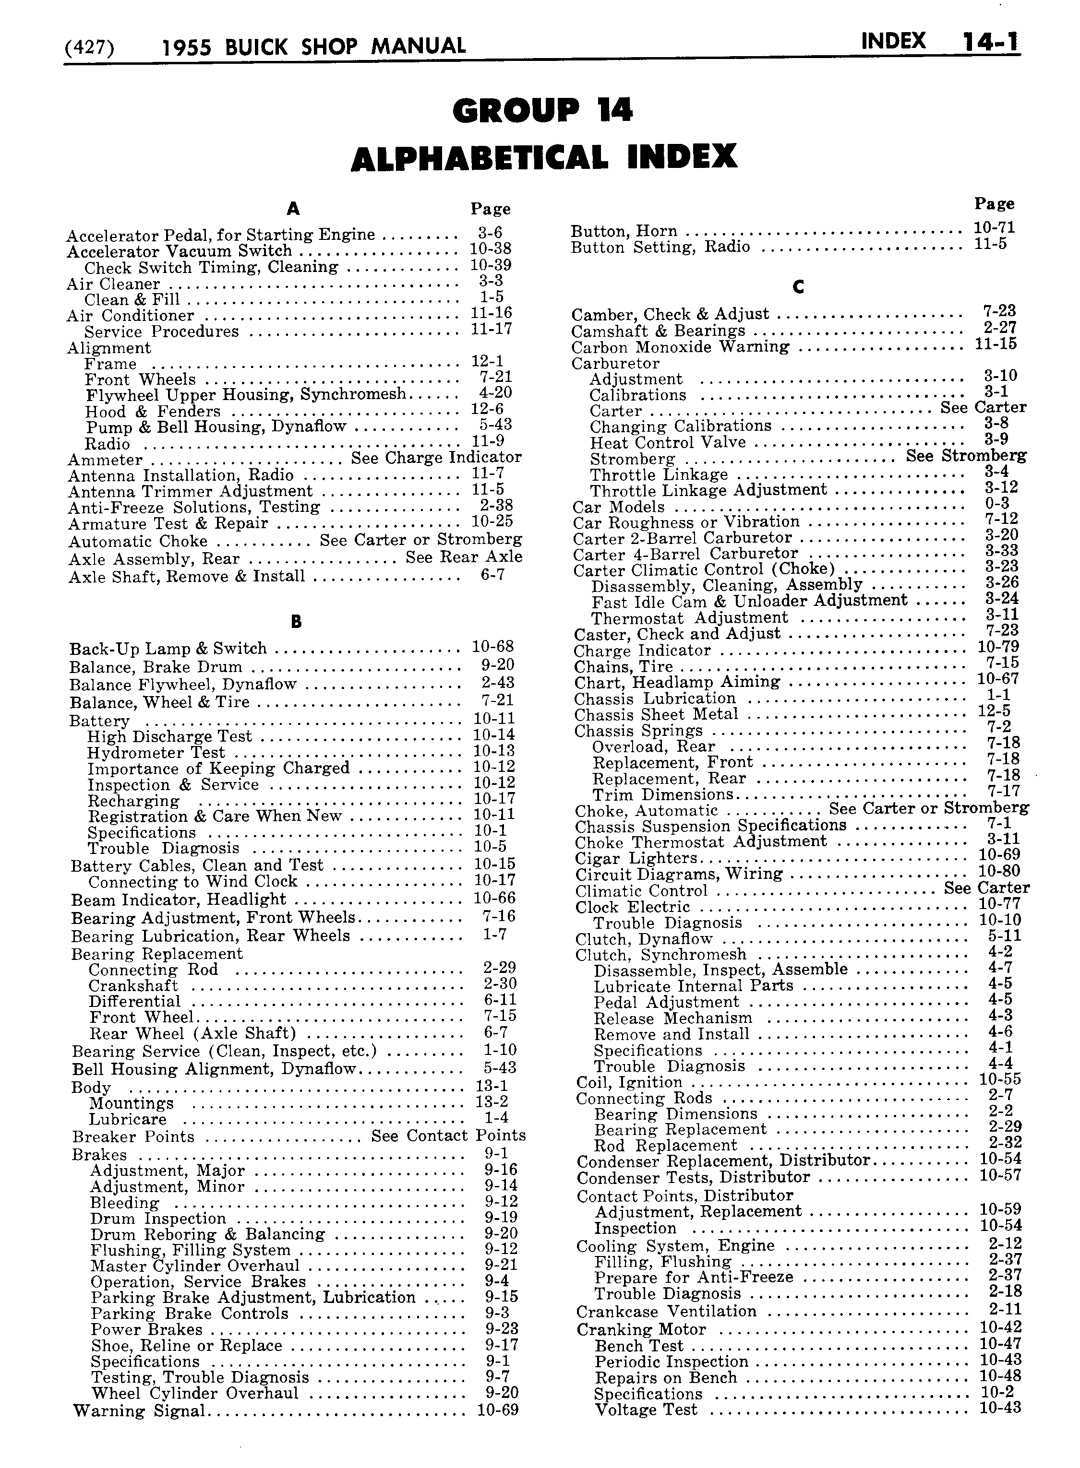 n_15 1955 Buick Shop Manual - Index-001-001.jpg